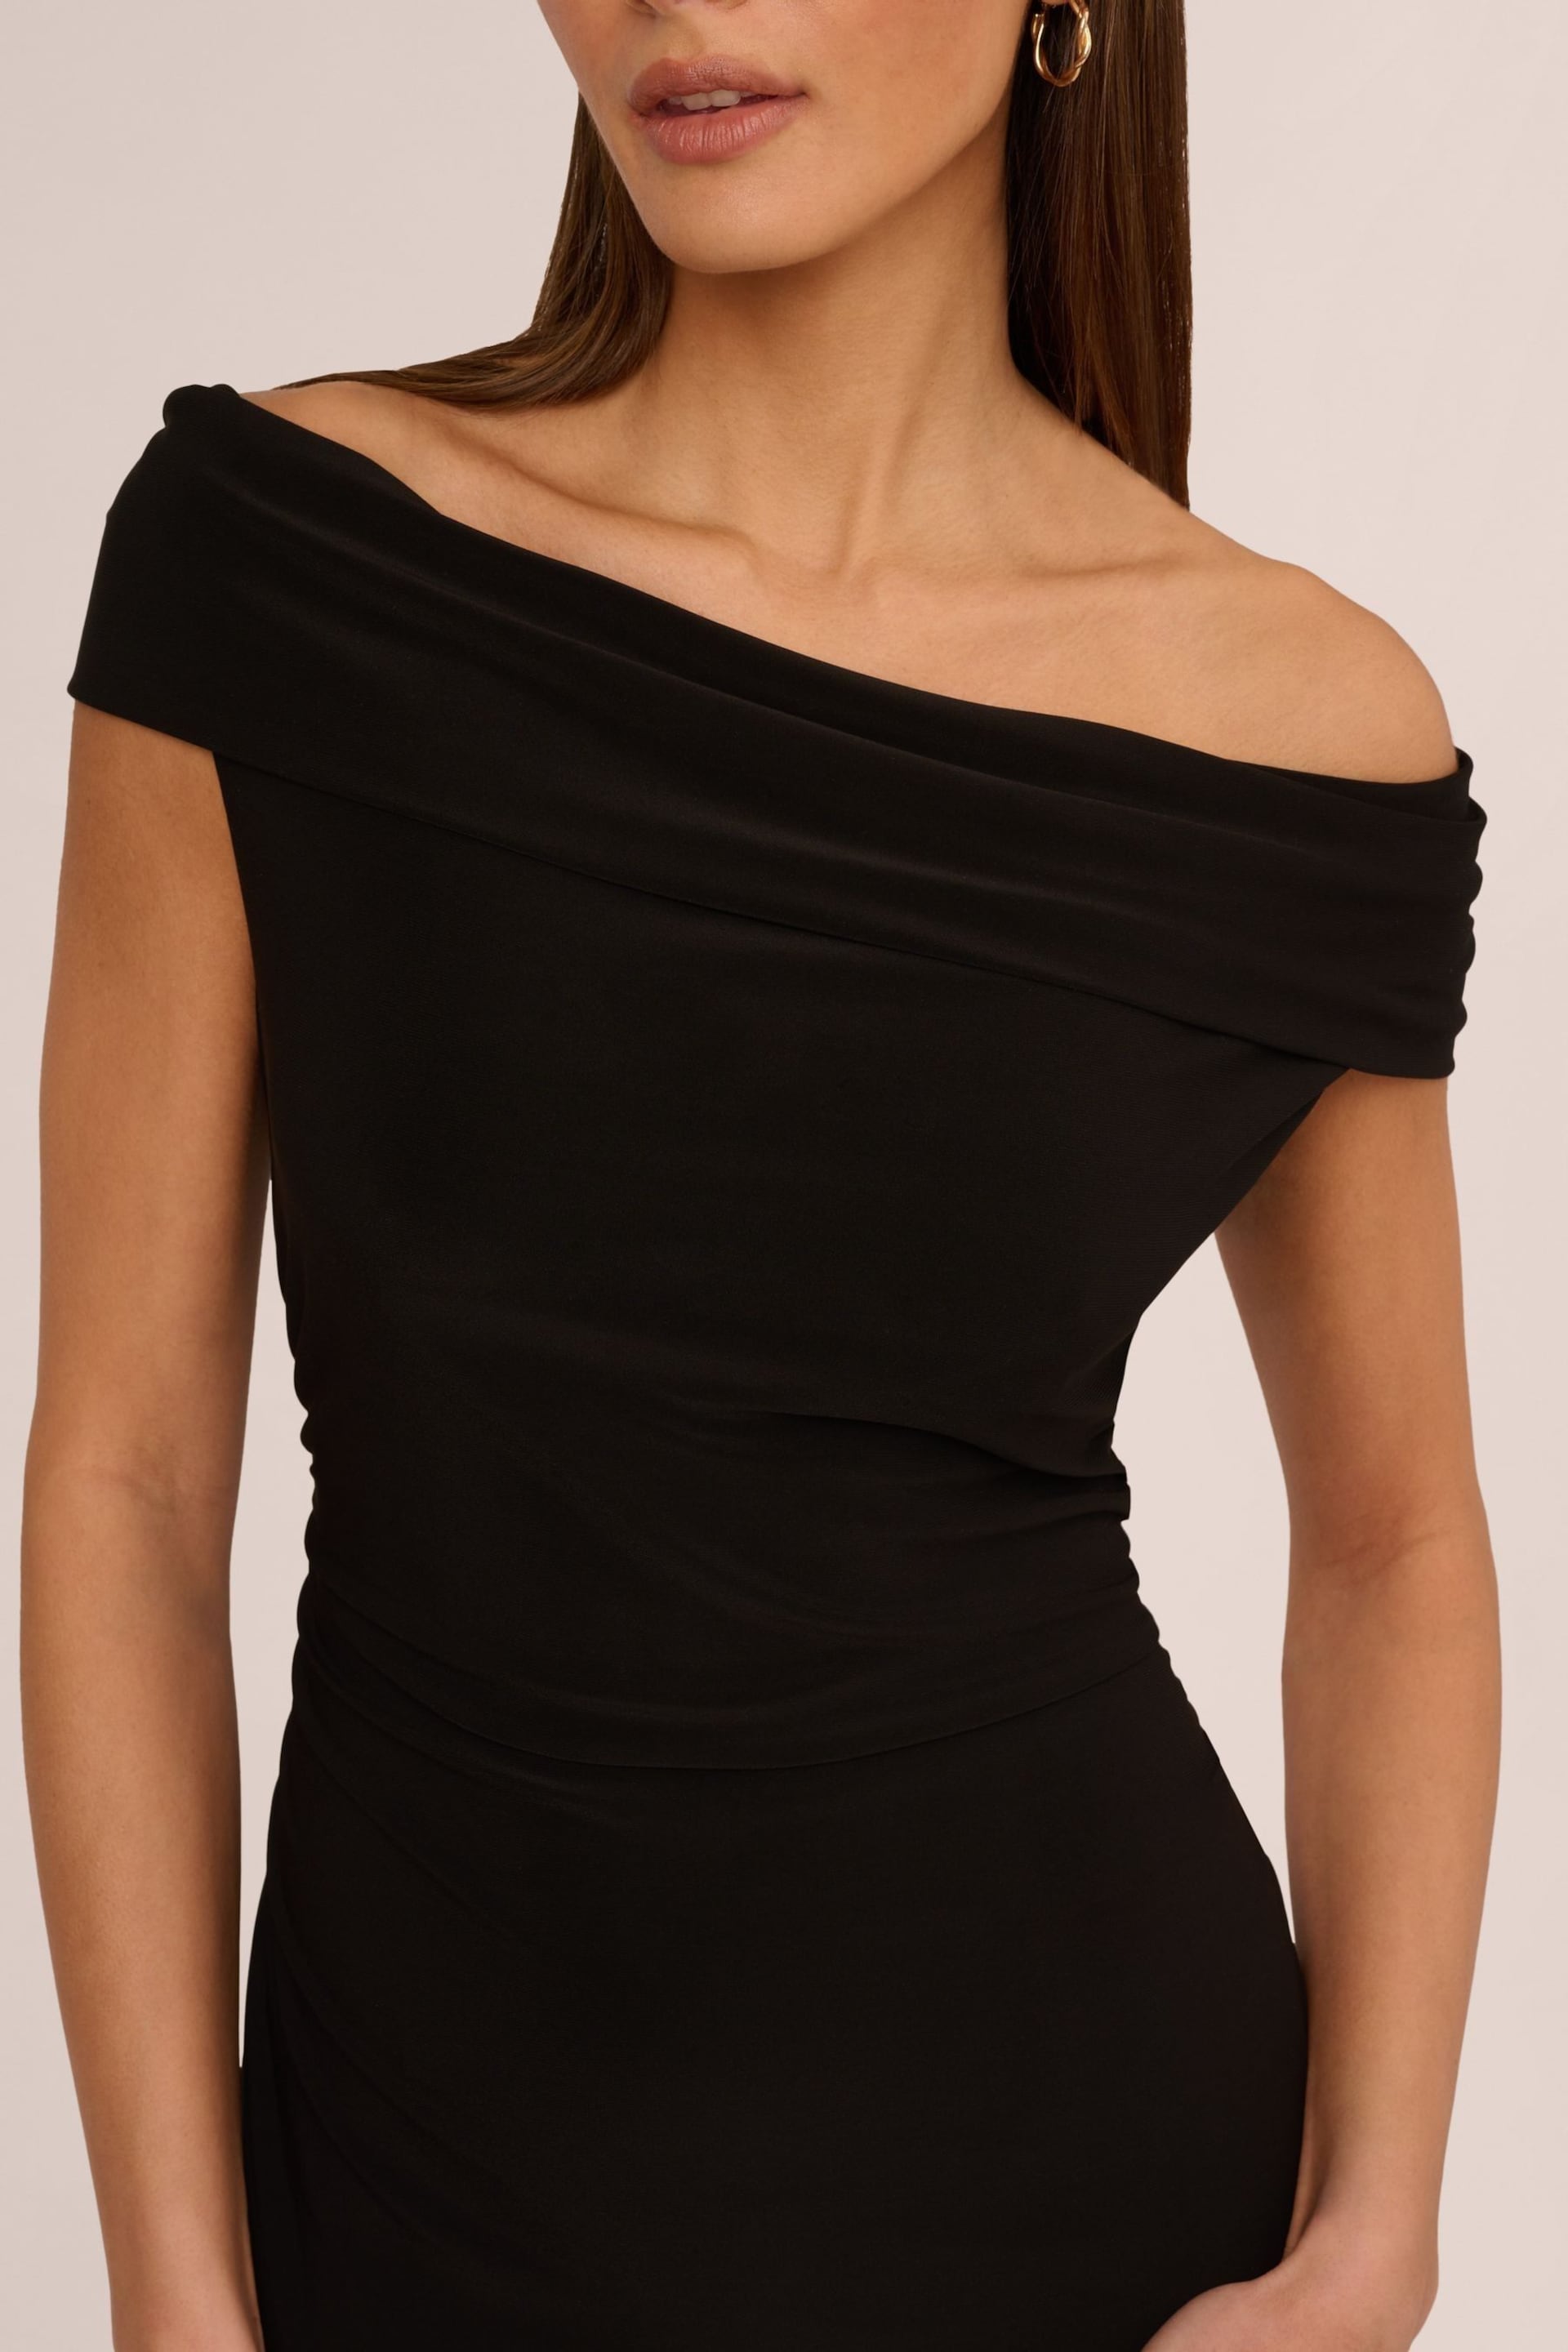 Adrianna Papell Matte Jersey Long Black Dress - Image 5 of 7